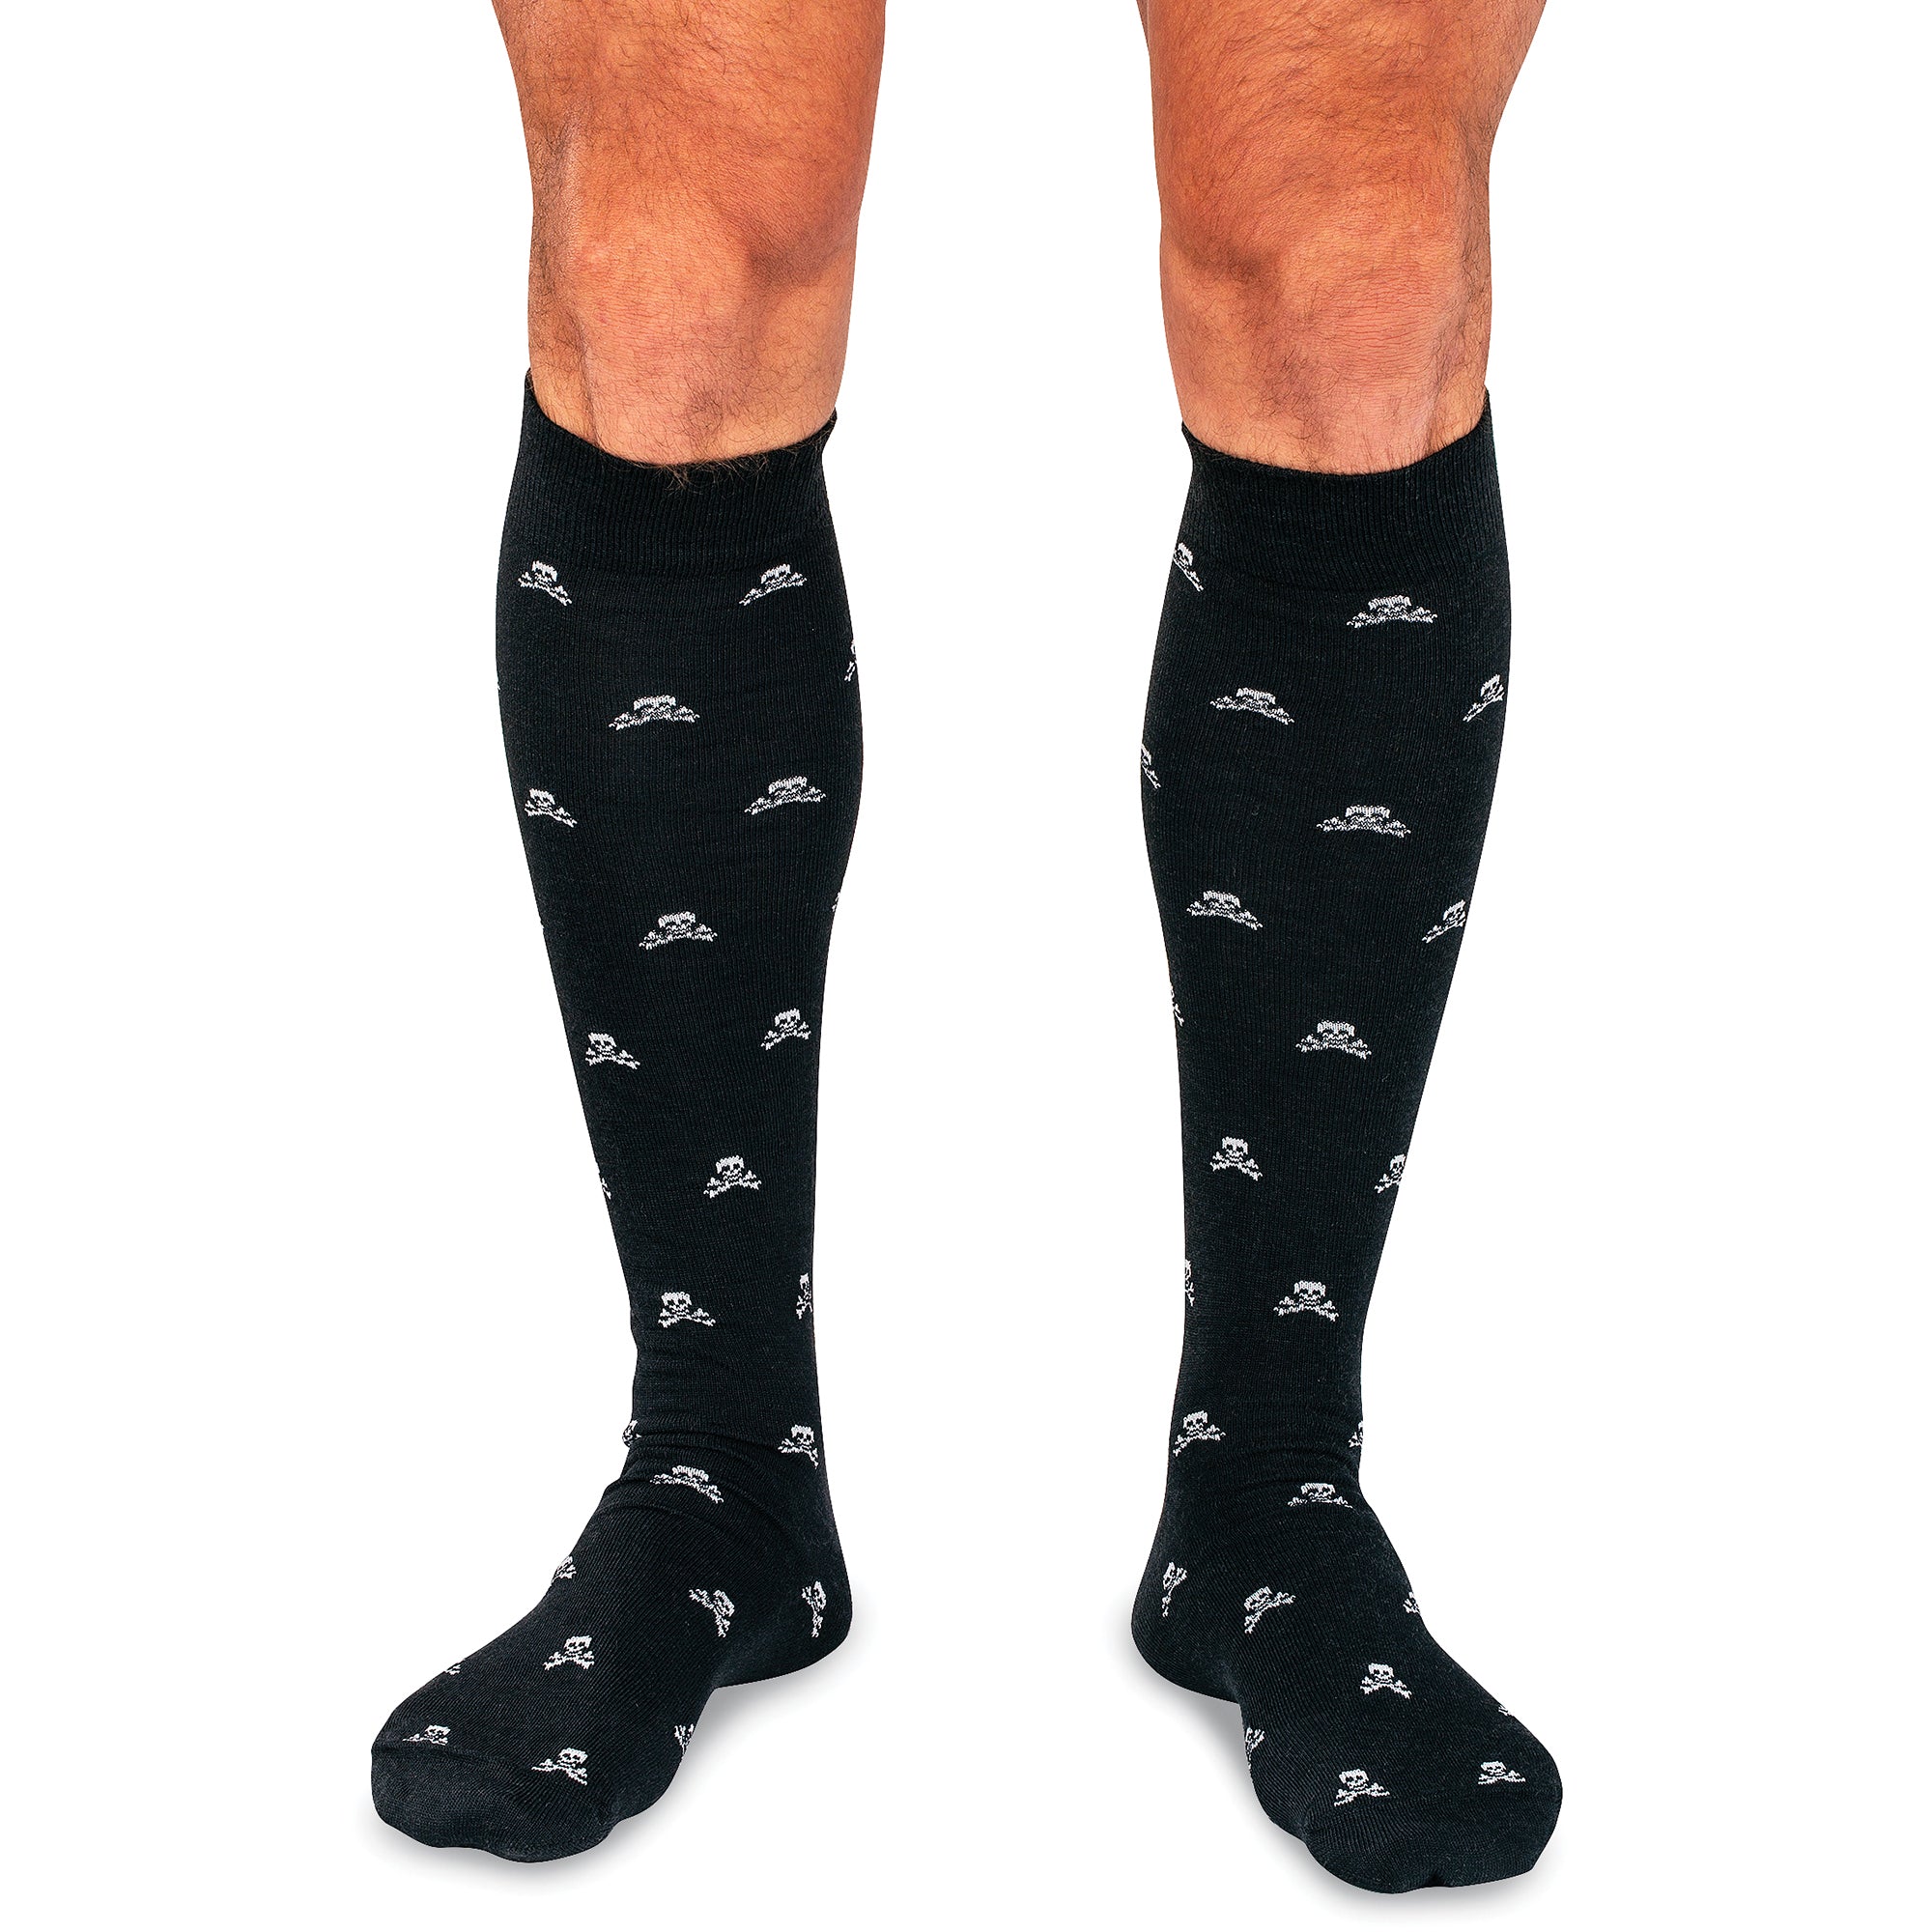 Finally, Dress Socks that Won't Slide Down - The Sharp Gentleman